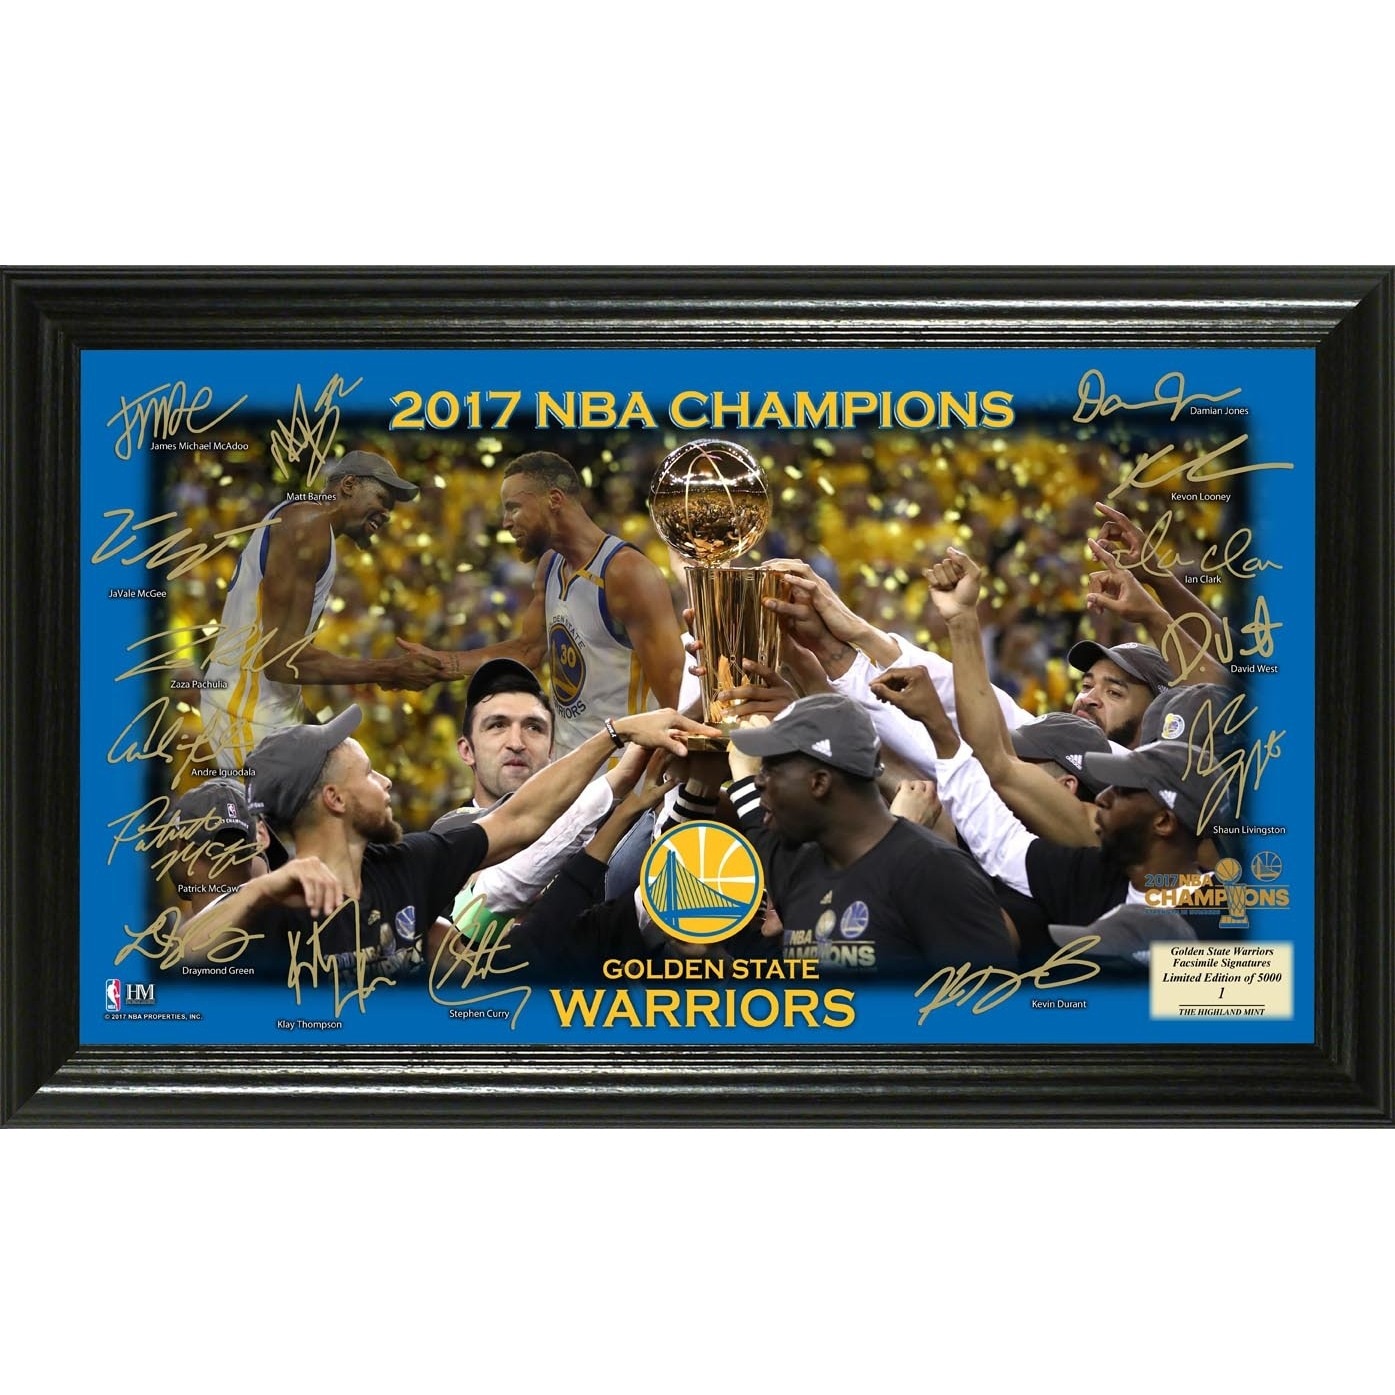 FULL 2017 NBA Championship Celebration From Golden State Warriors